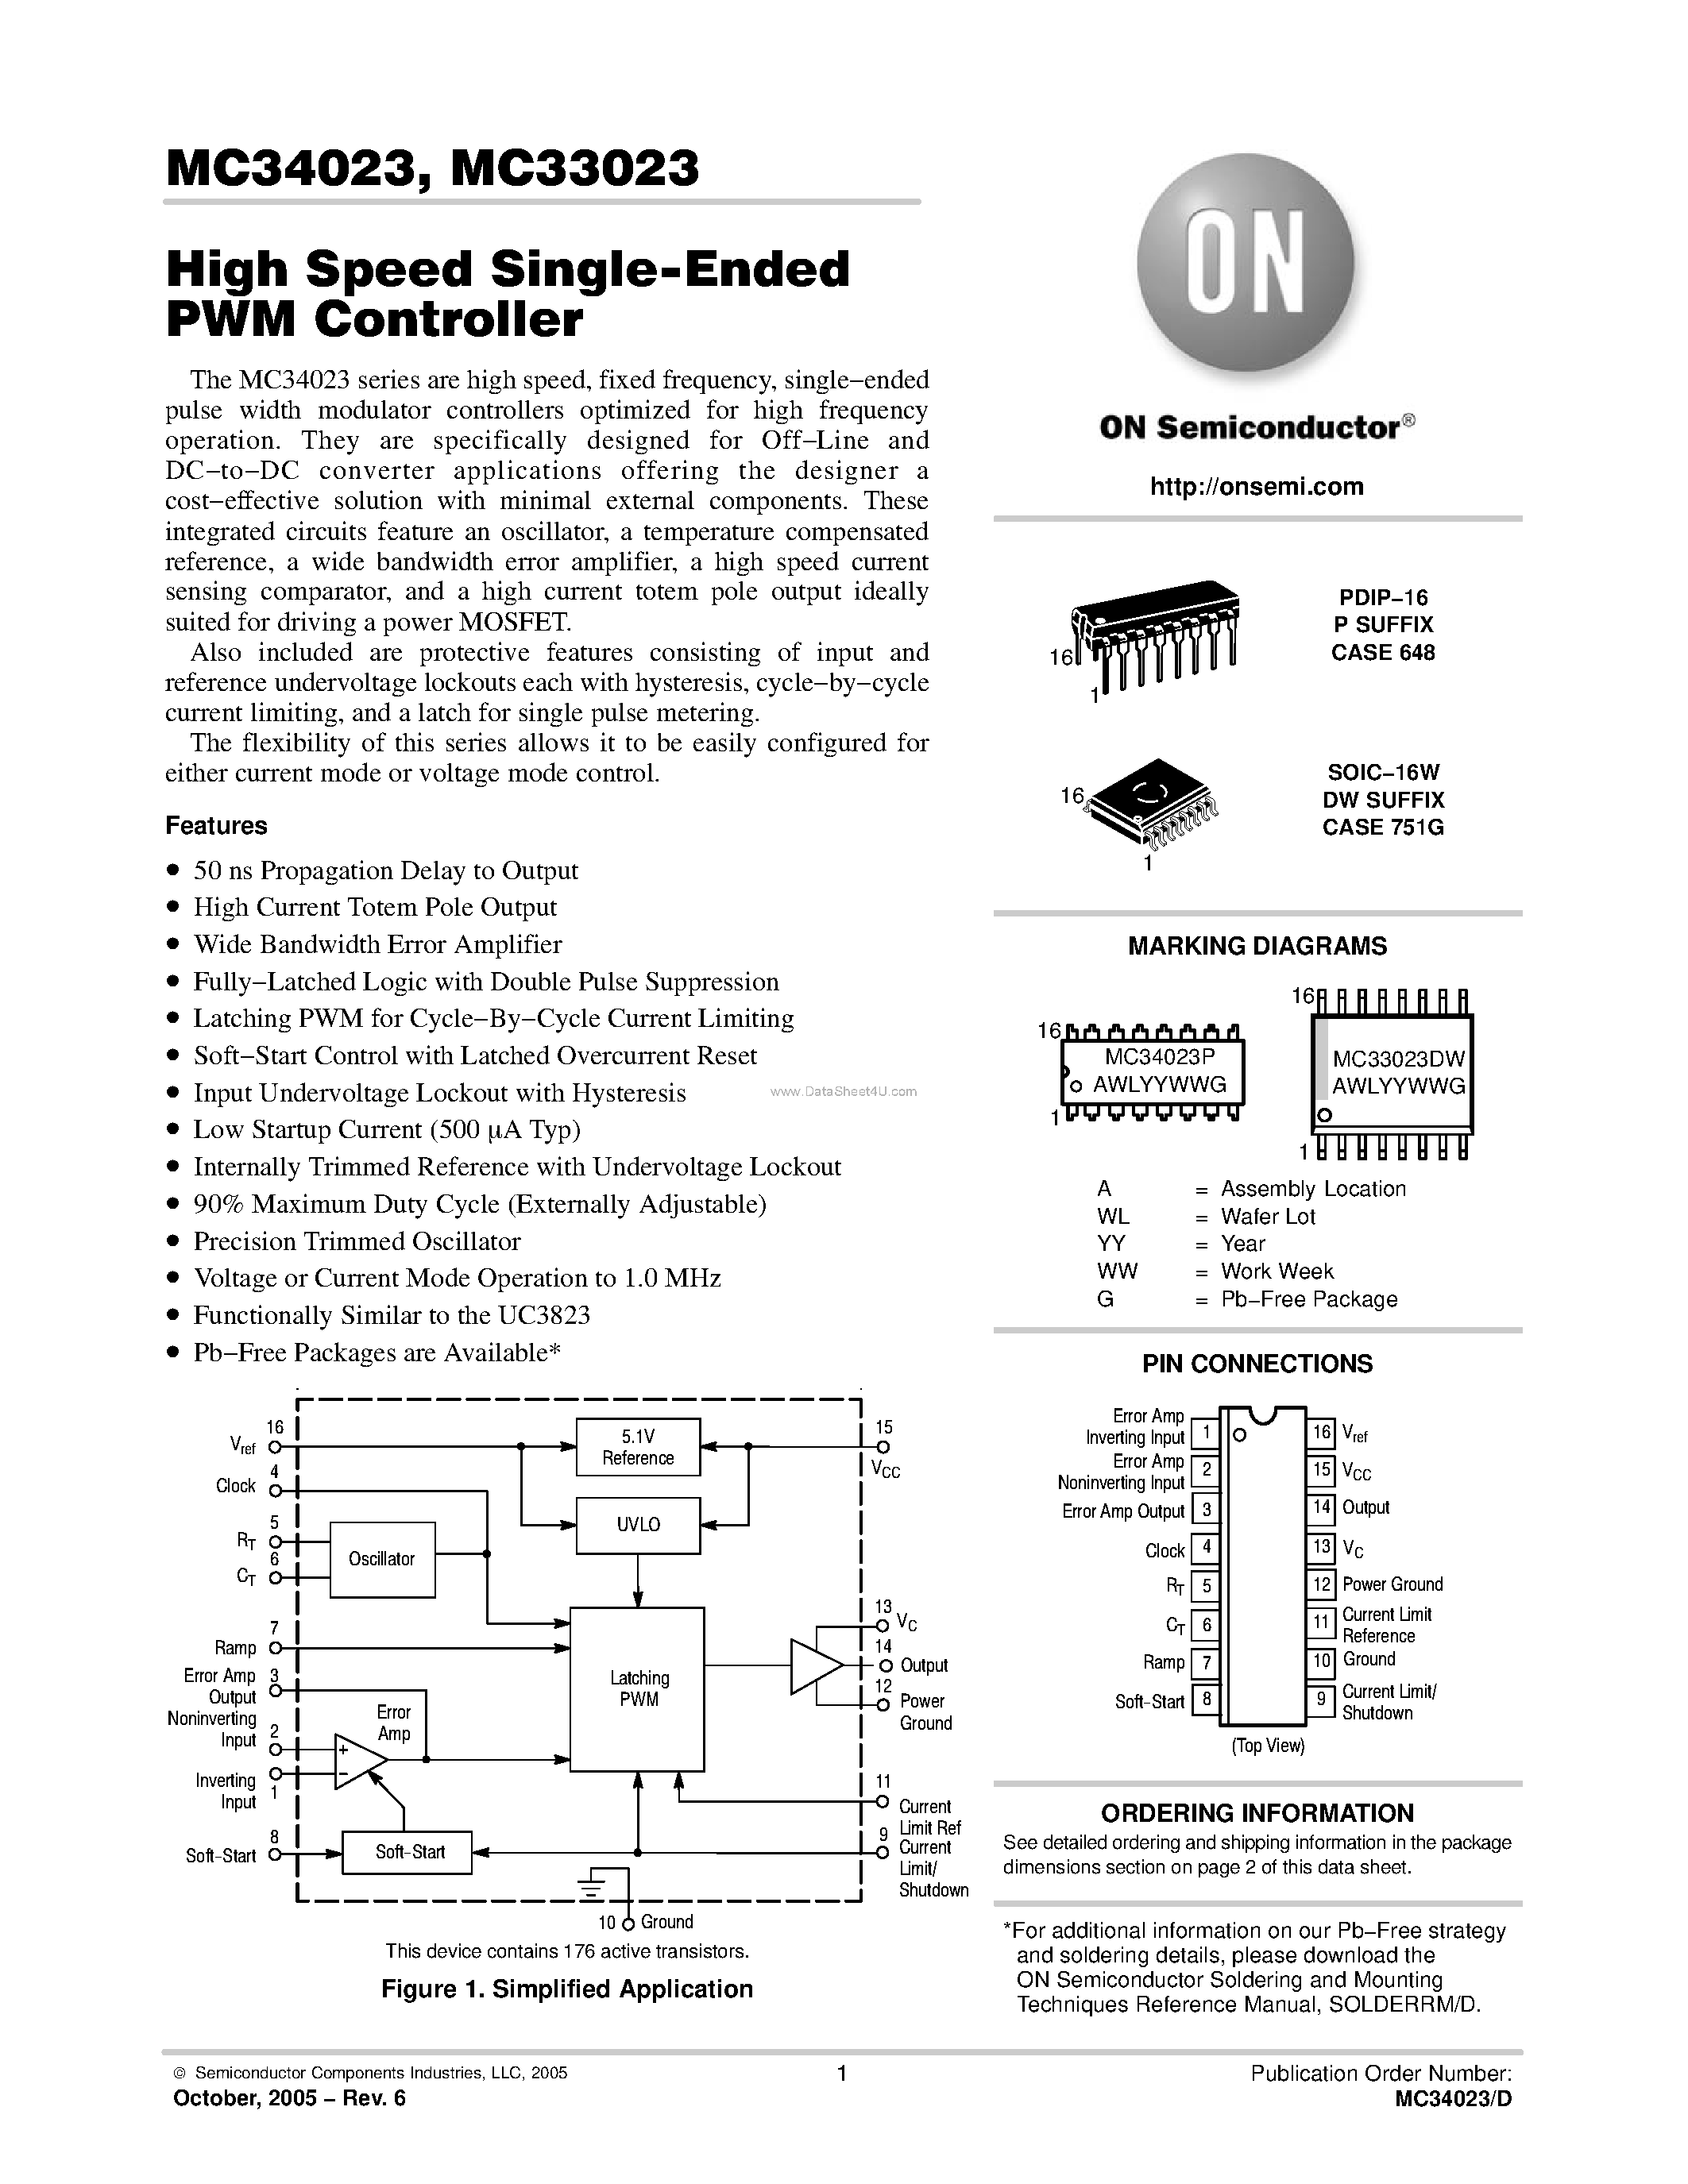 Даташит MC33023 - (MC33023 / MC34023) High Speed Single-Ended PWM Controller страница 1